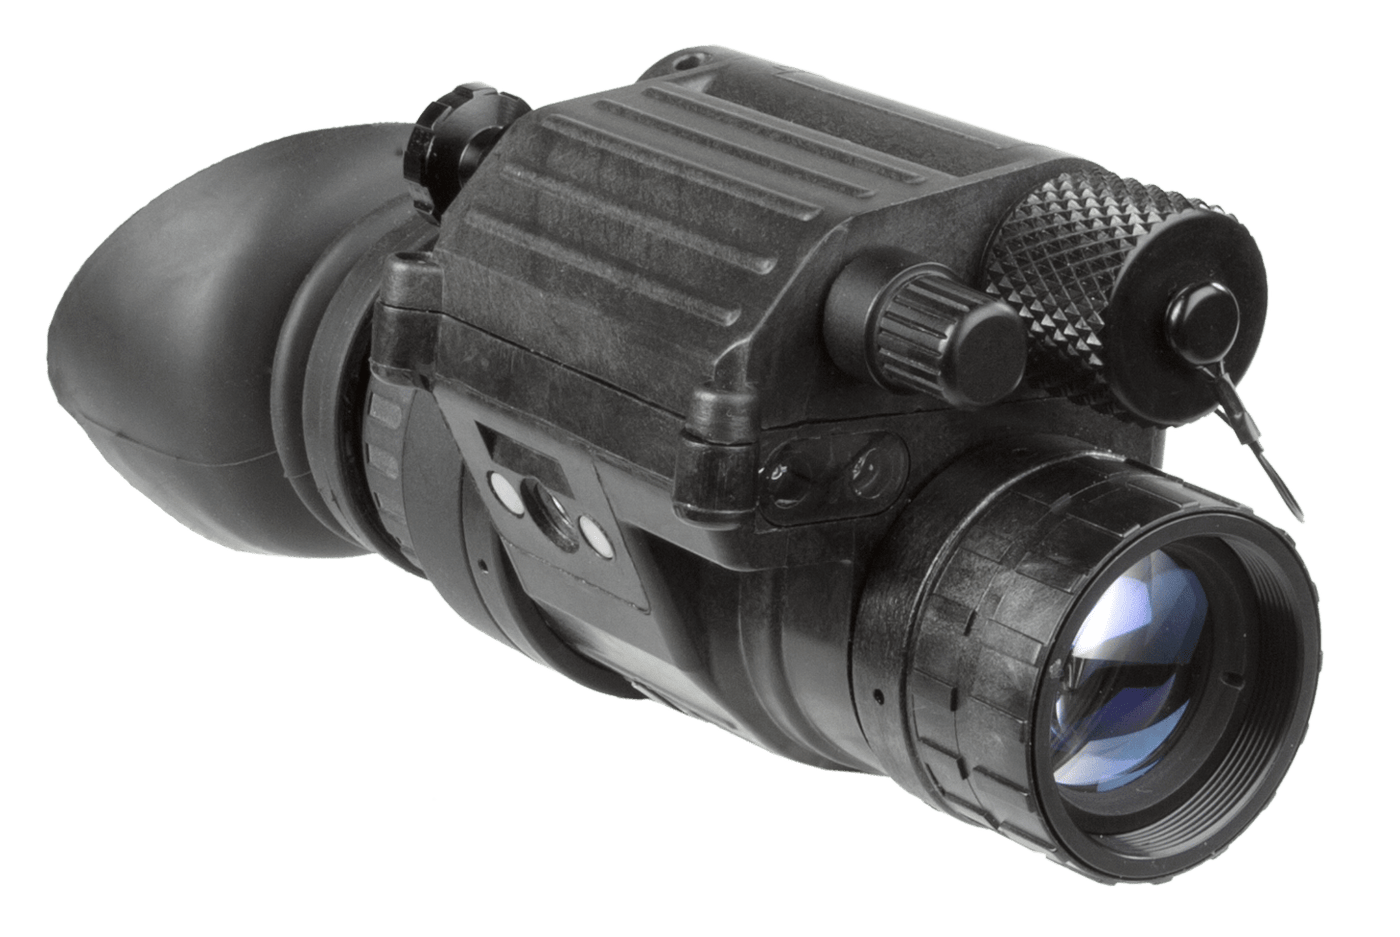 AGM GLOBAL VISION AGM Global Vision PVS-14 NL1 Night Vision Monocular/ Mountable Black 1x26mm 40 Degrees FOV Generation 2+ Level 1 51-64 lp/mm Resolution 11P14122453011 Optics